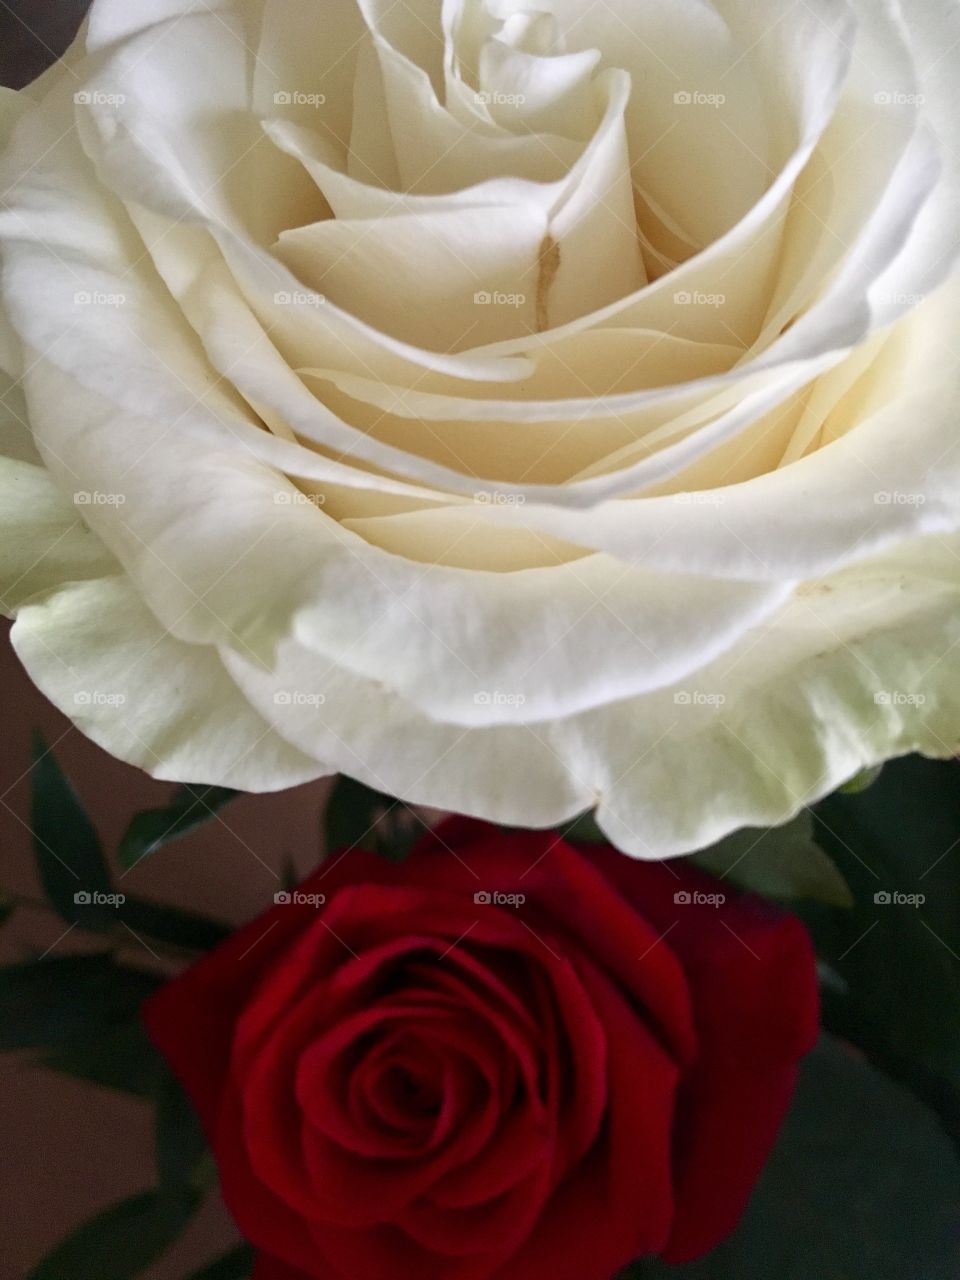 Roses from my boyfriend. 